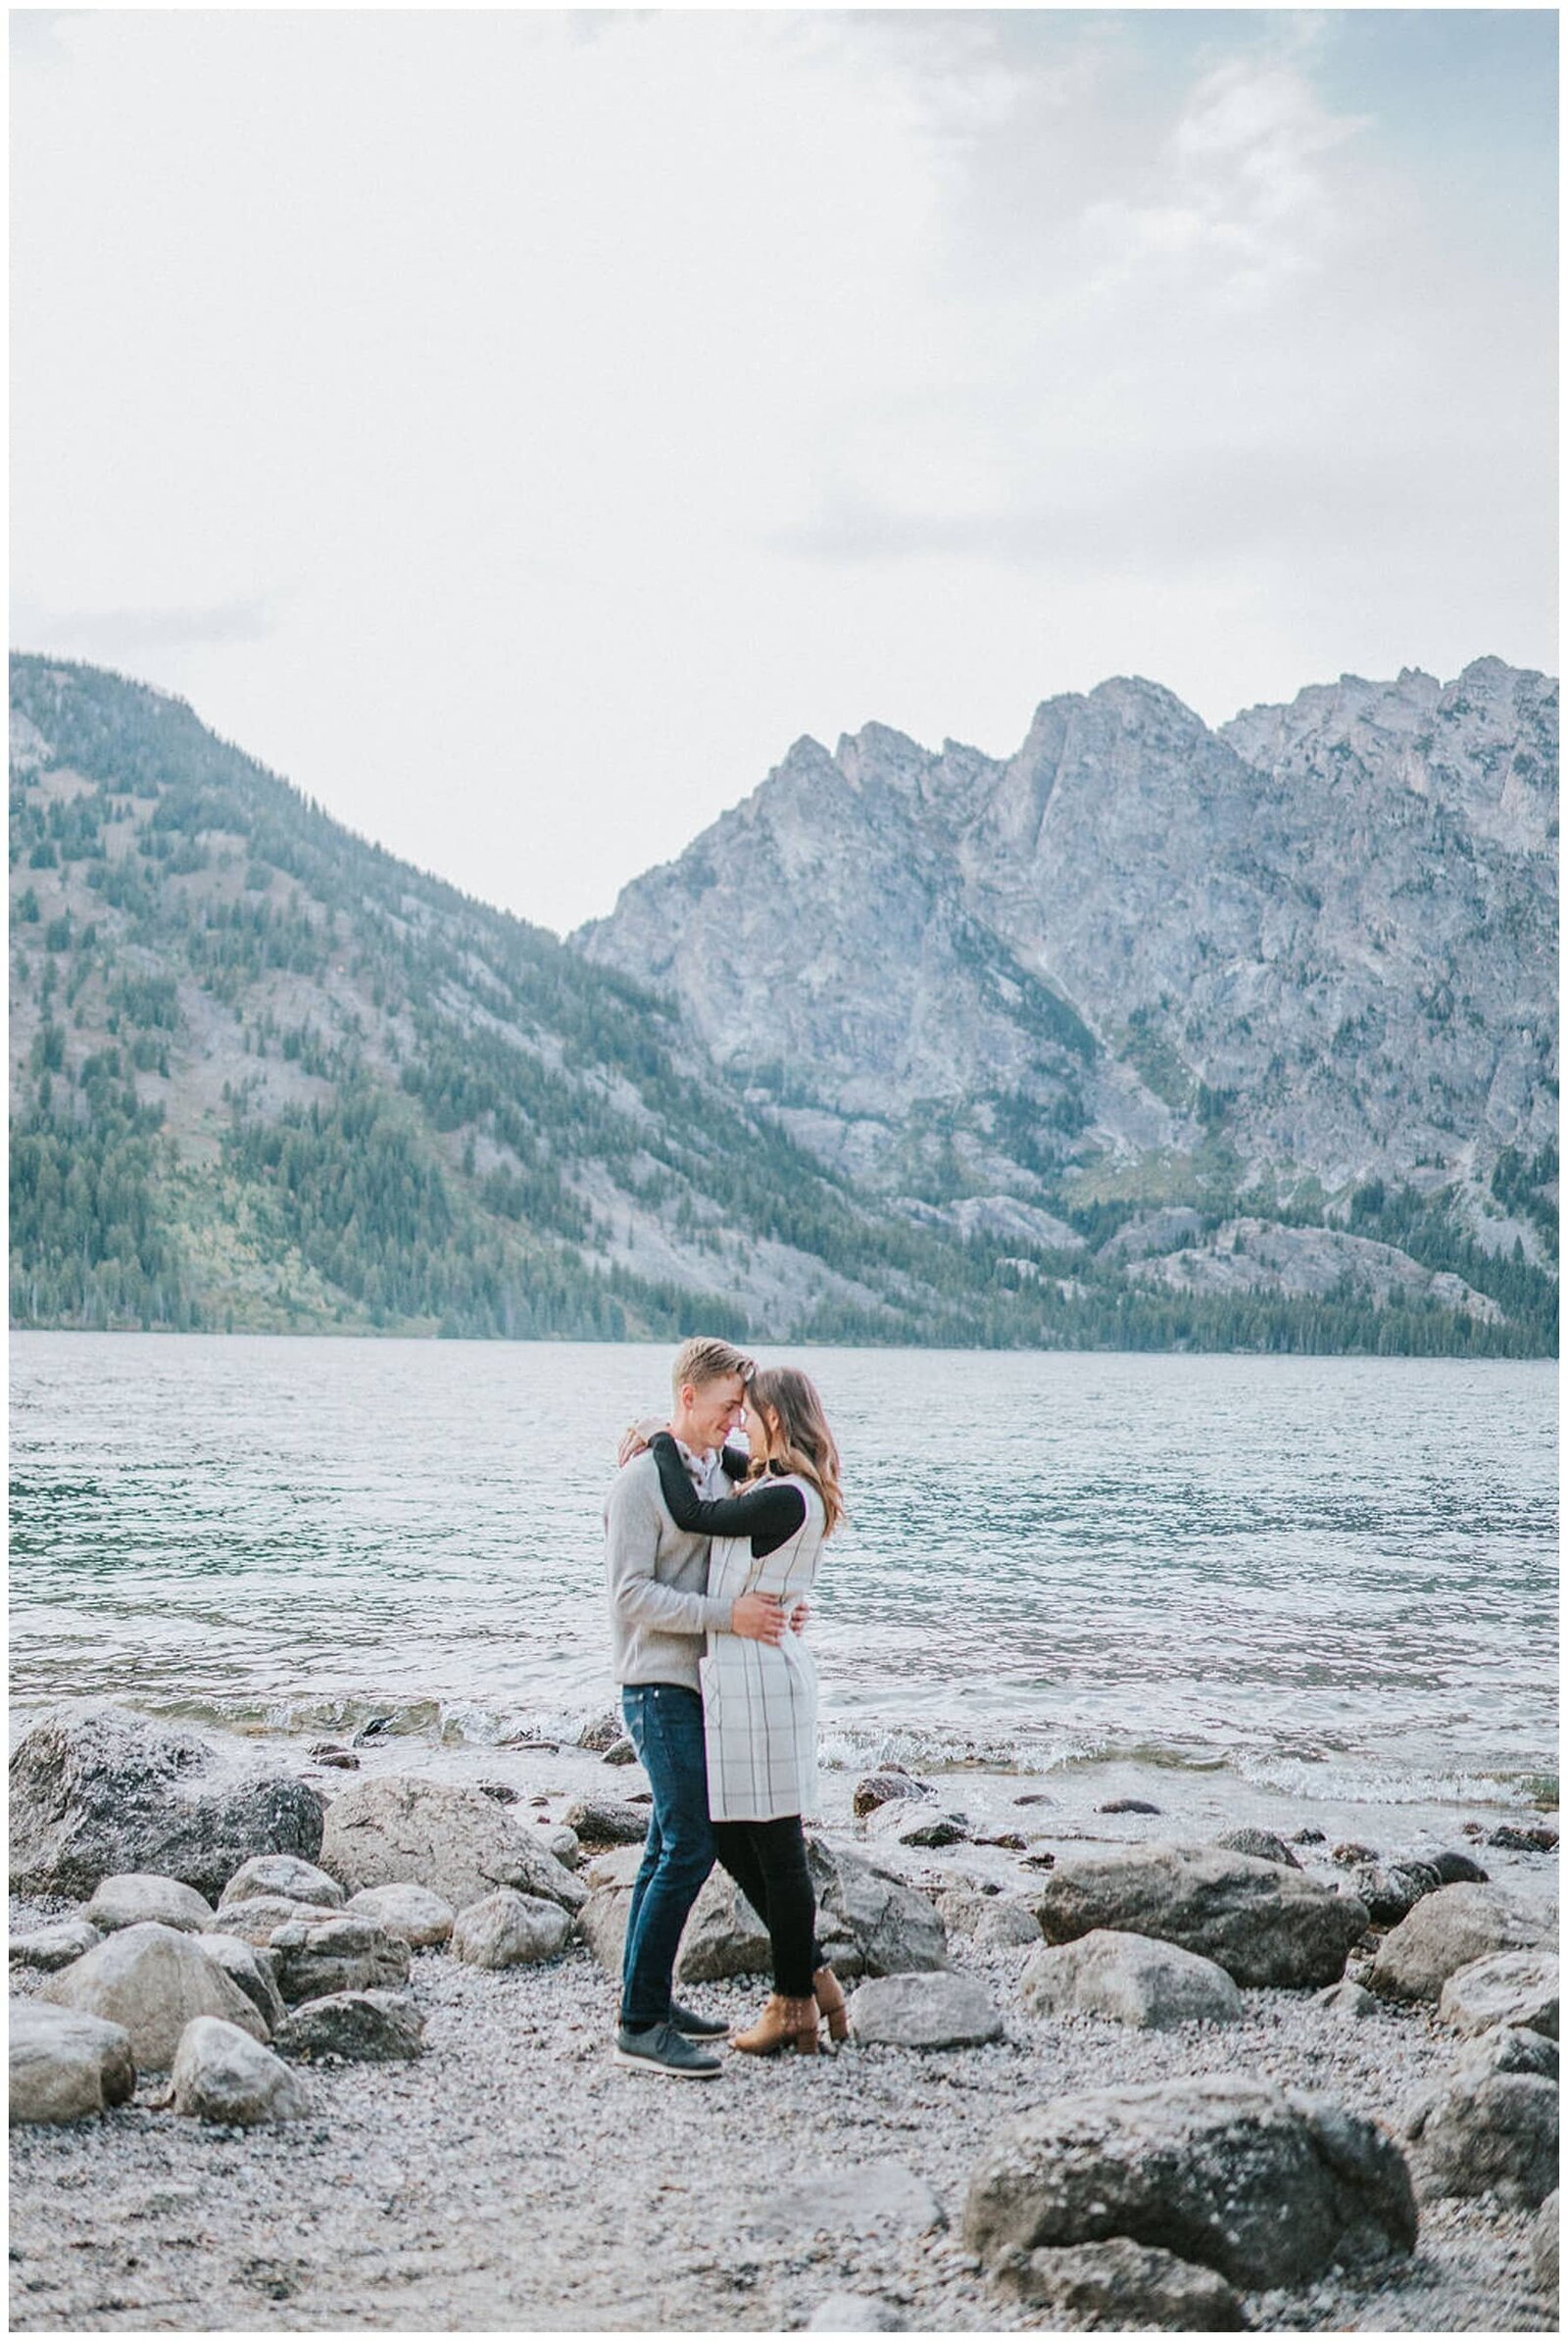 Lake Tahoe wedding photographer captures couple embracing during engagements